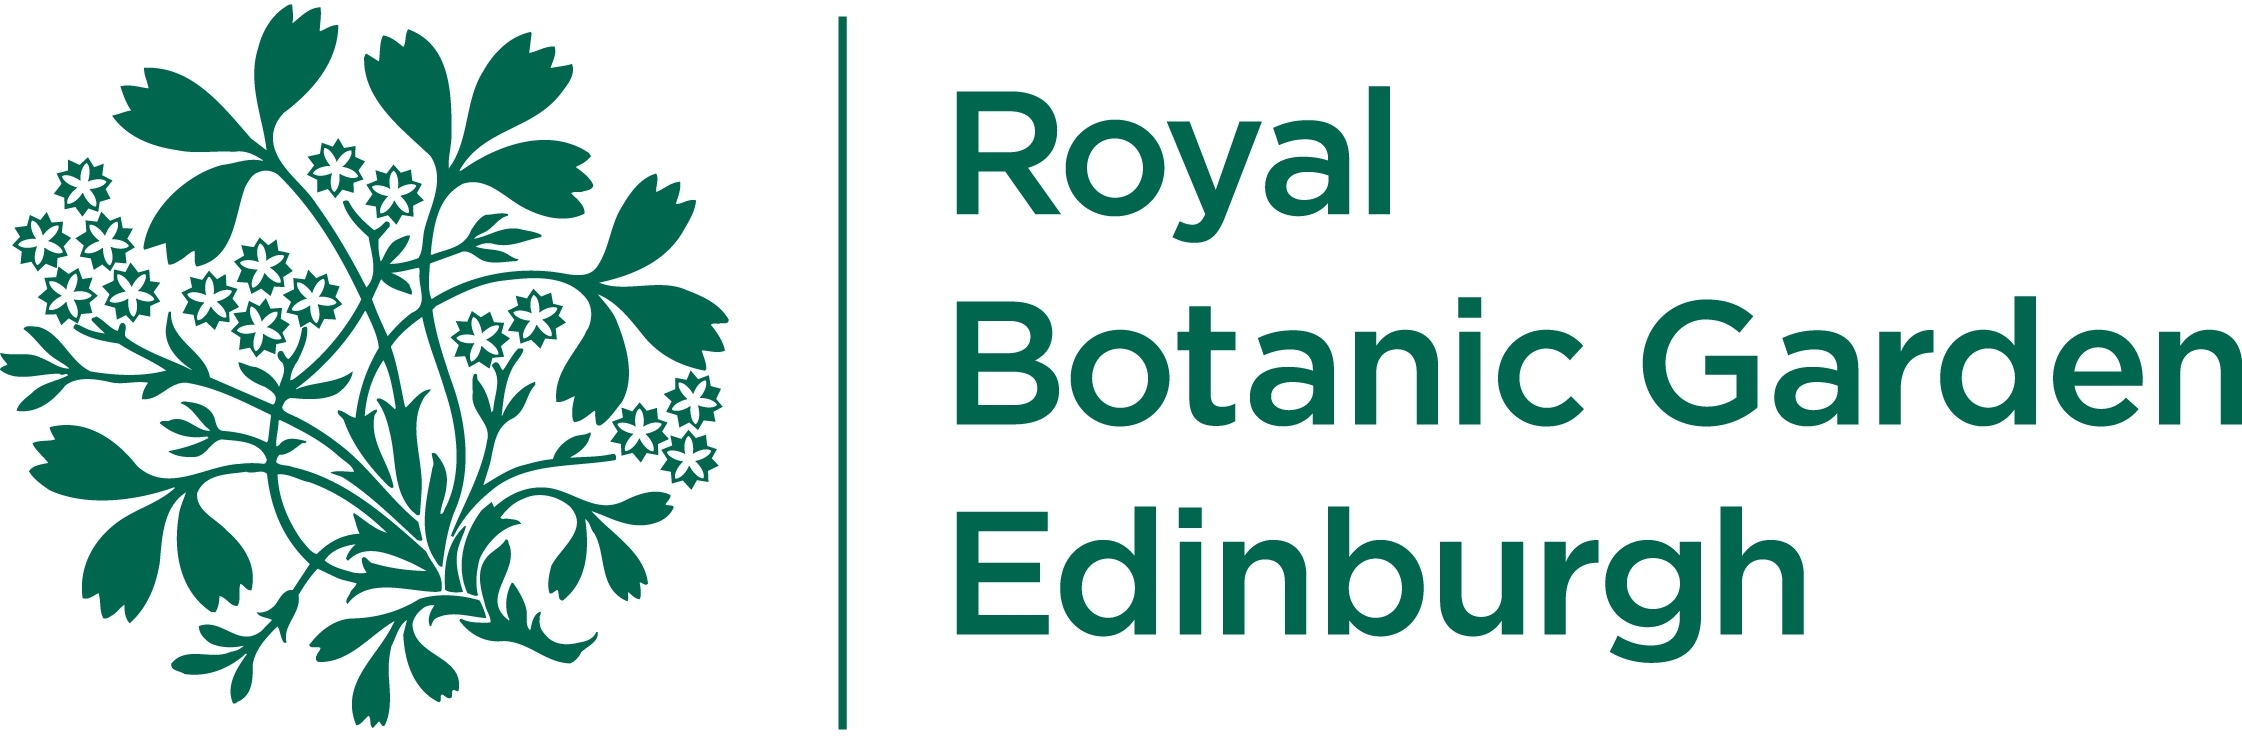 logo for Royal Botanic Garden Edinburgh